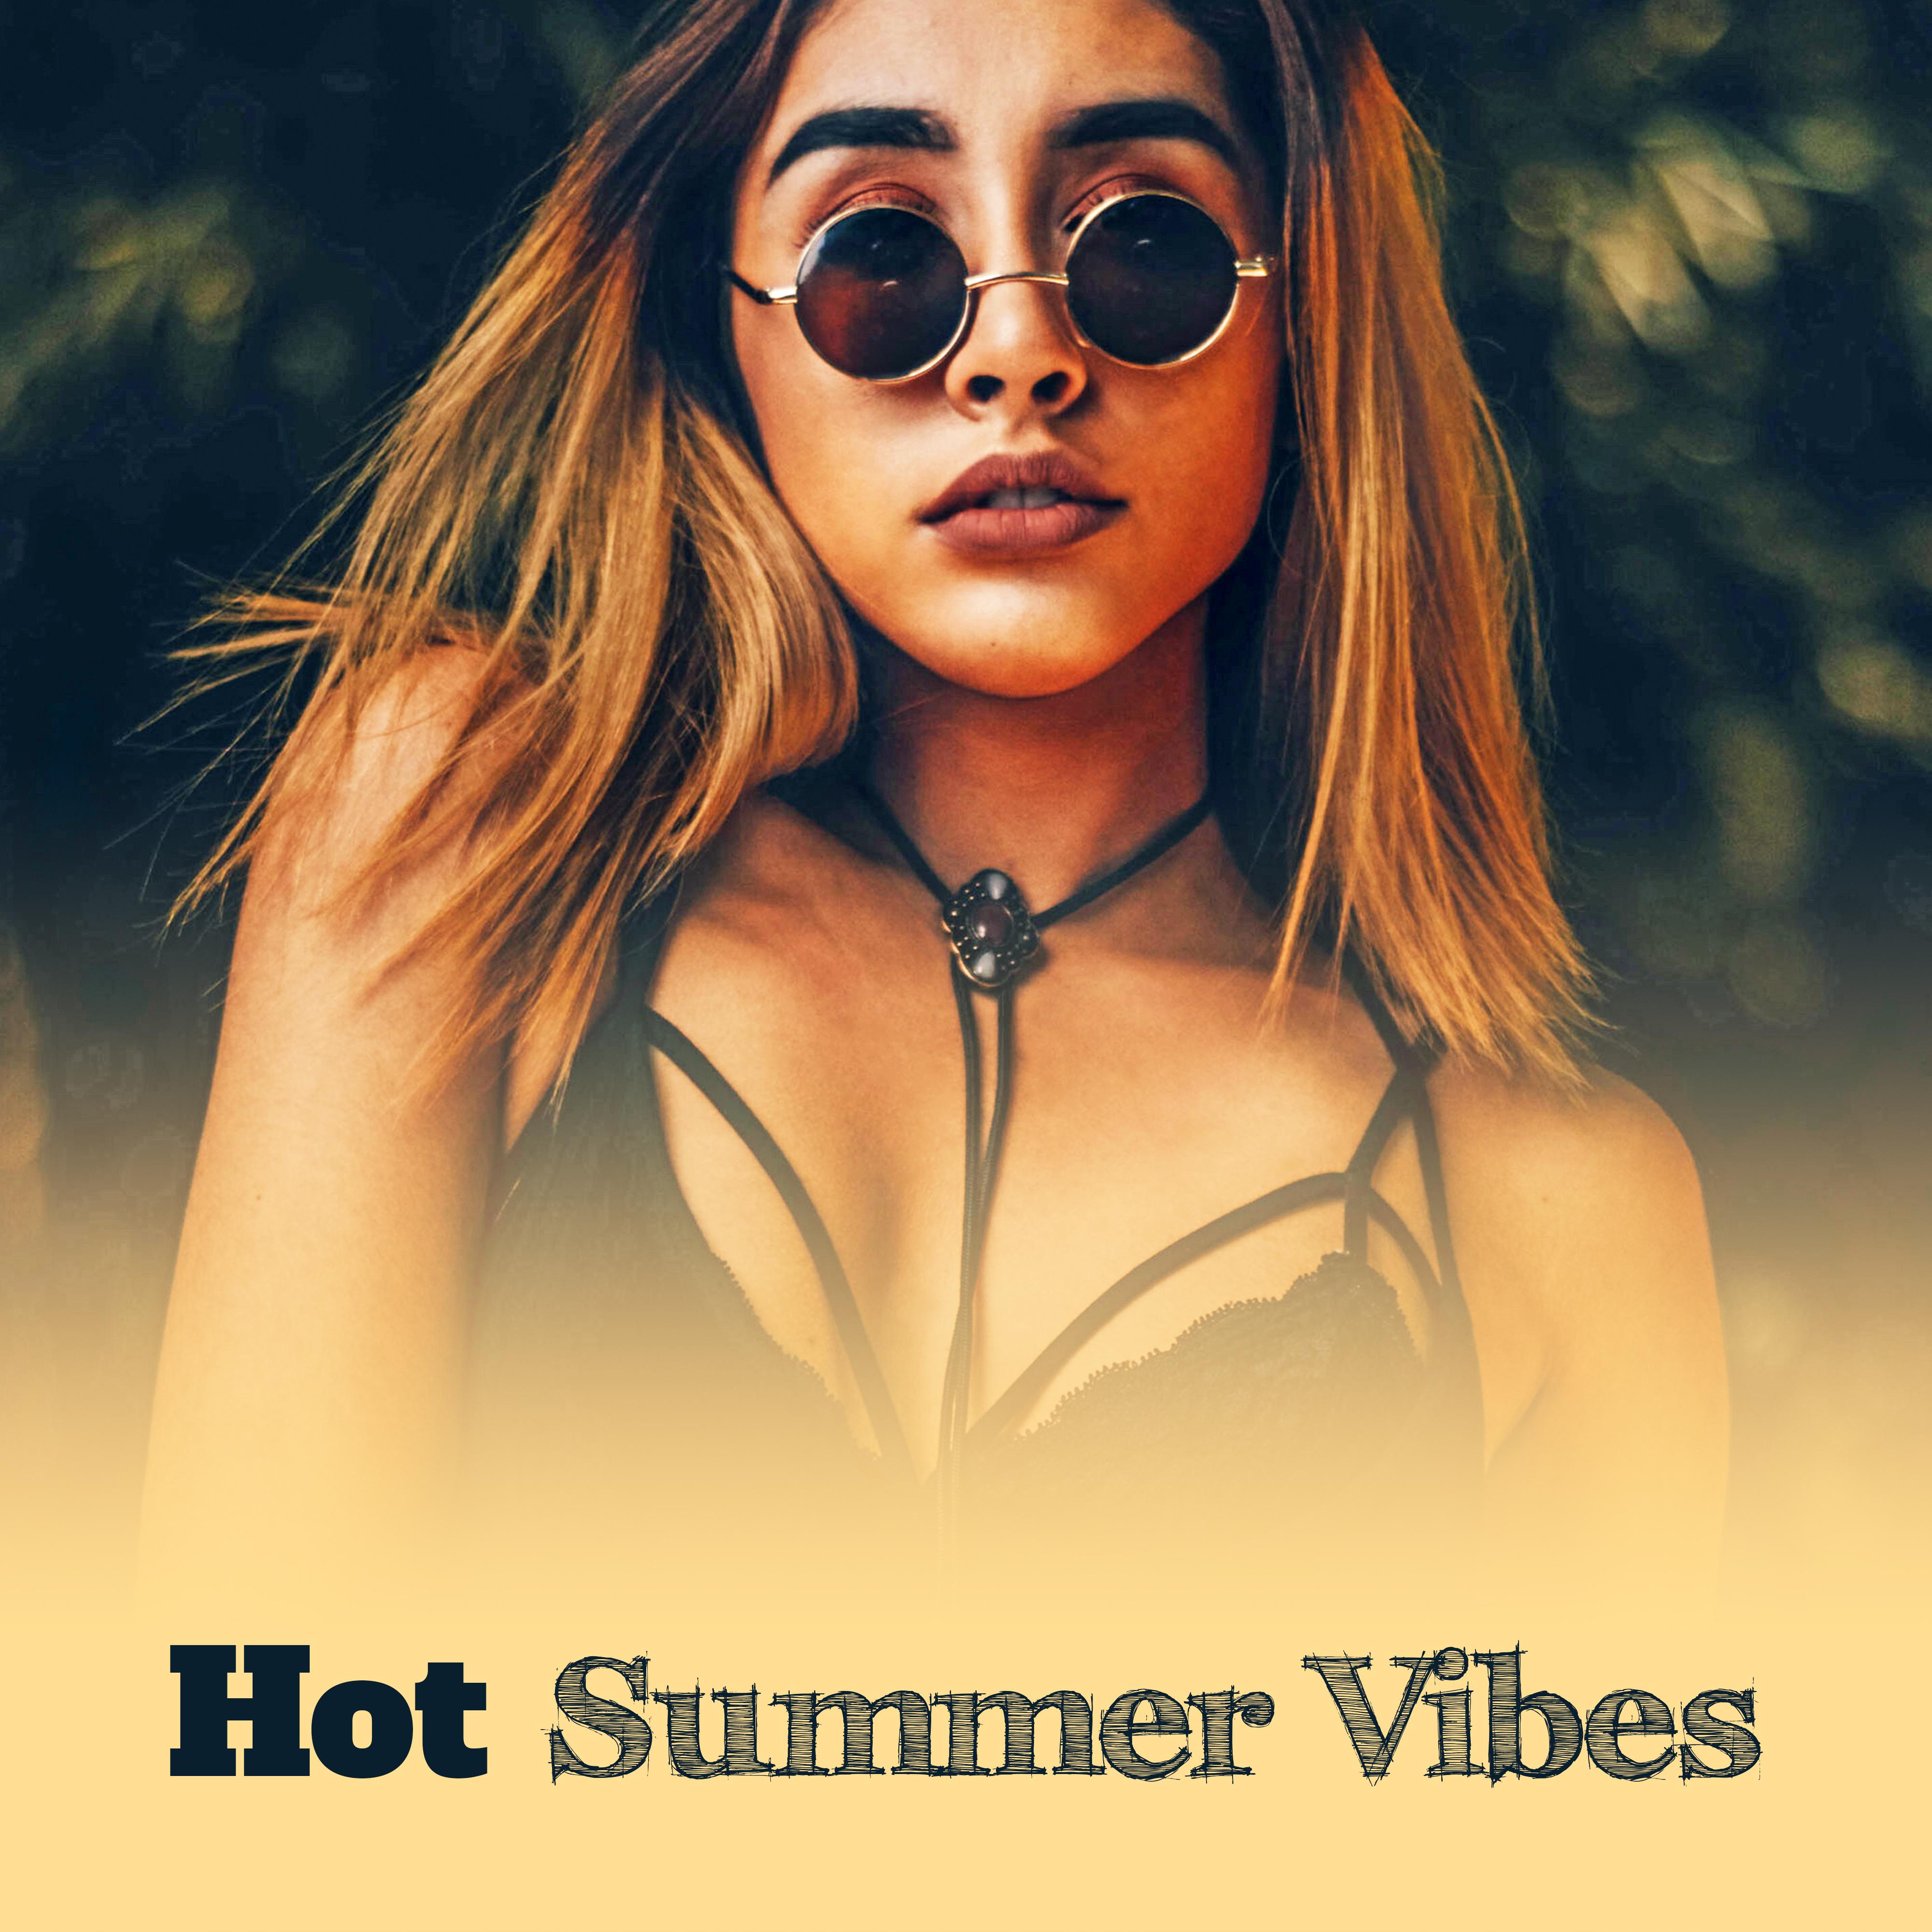 Hot Summer Vibes  Little Party, Ibiza Dance, Beach Bar, Drinks  Cocktails